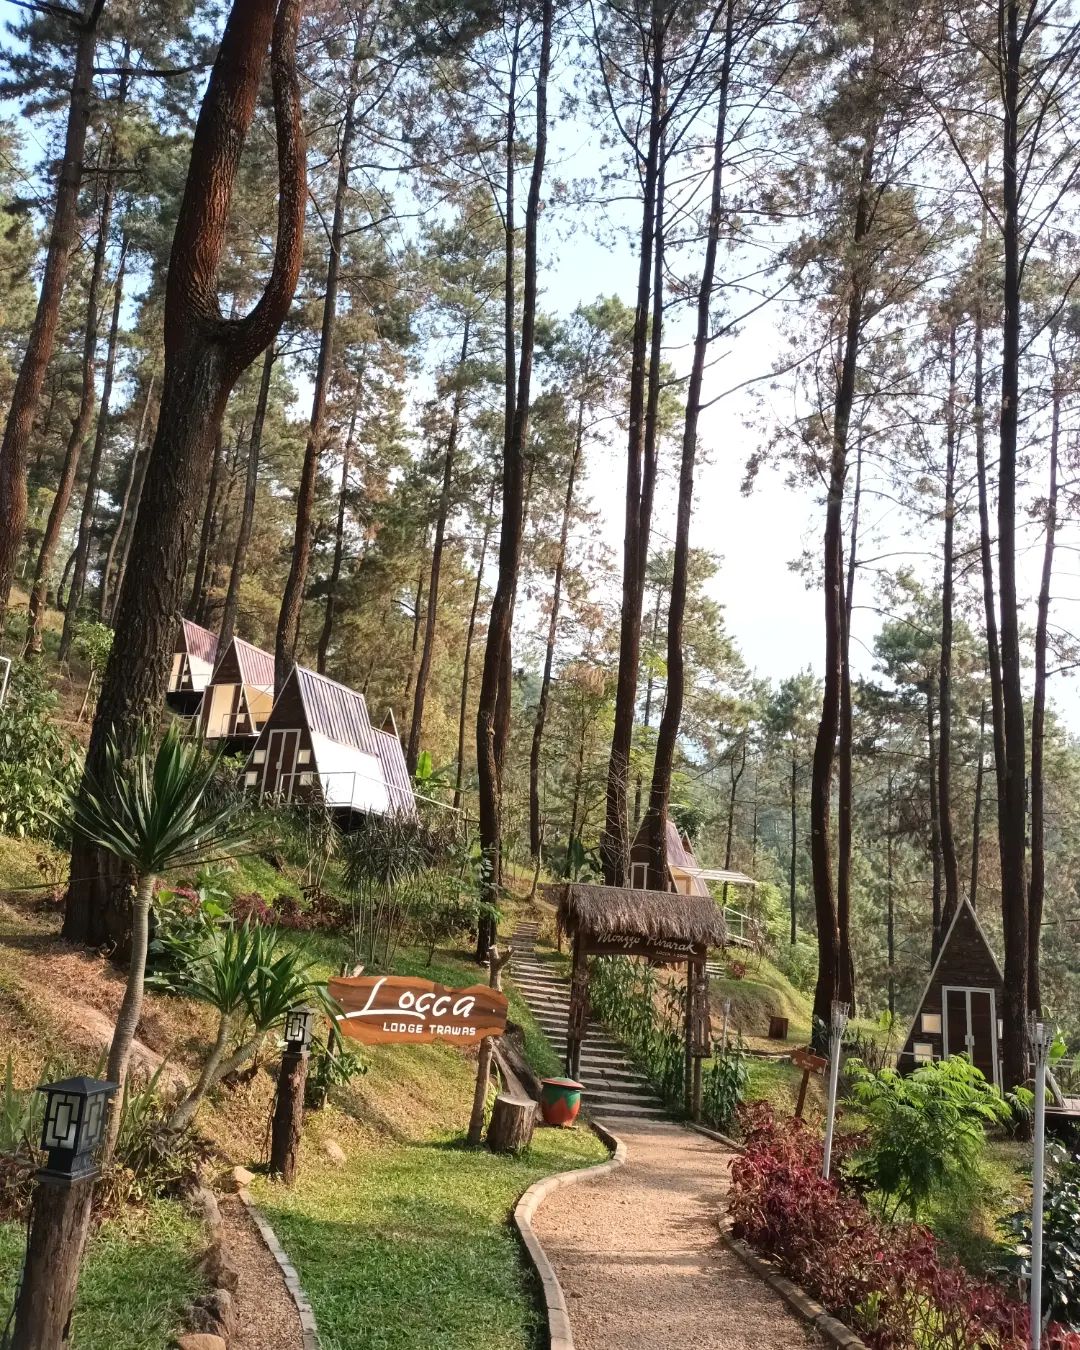 Lokasi Locca Lodge Trawas Mojokerto Image From @lesyeuxdeiqis